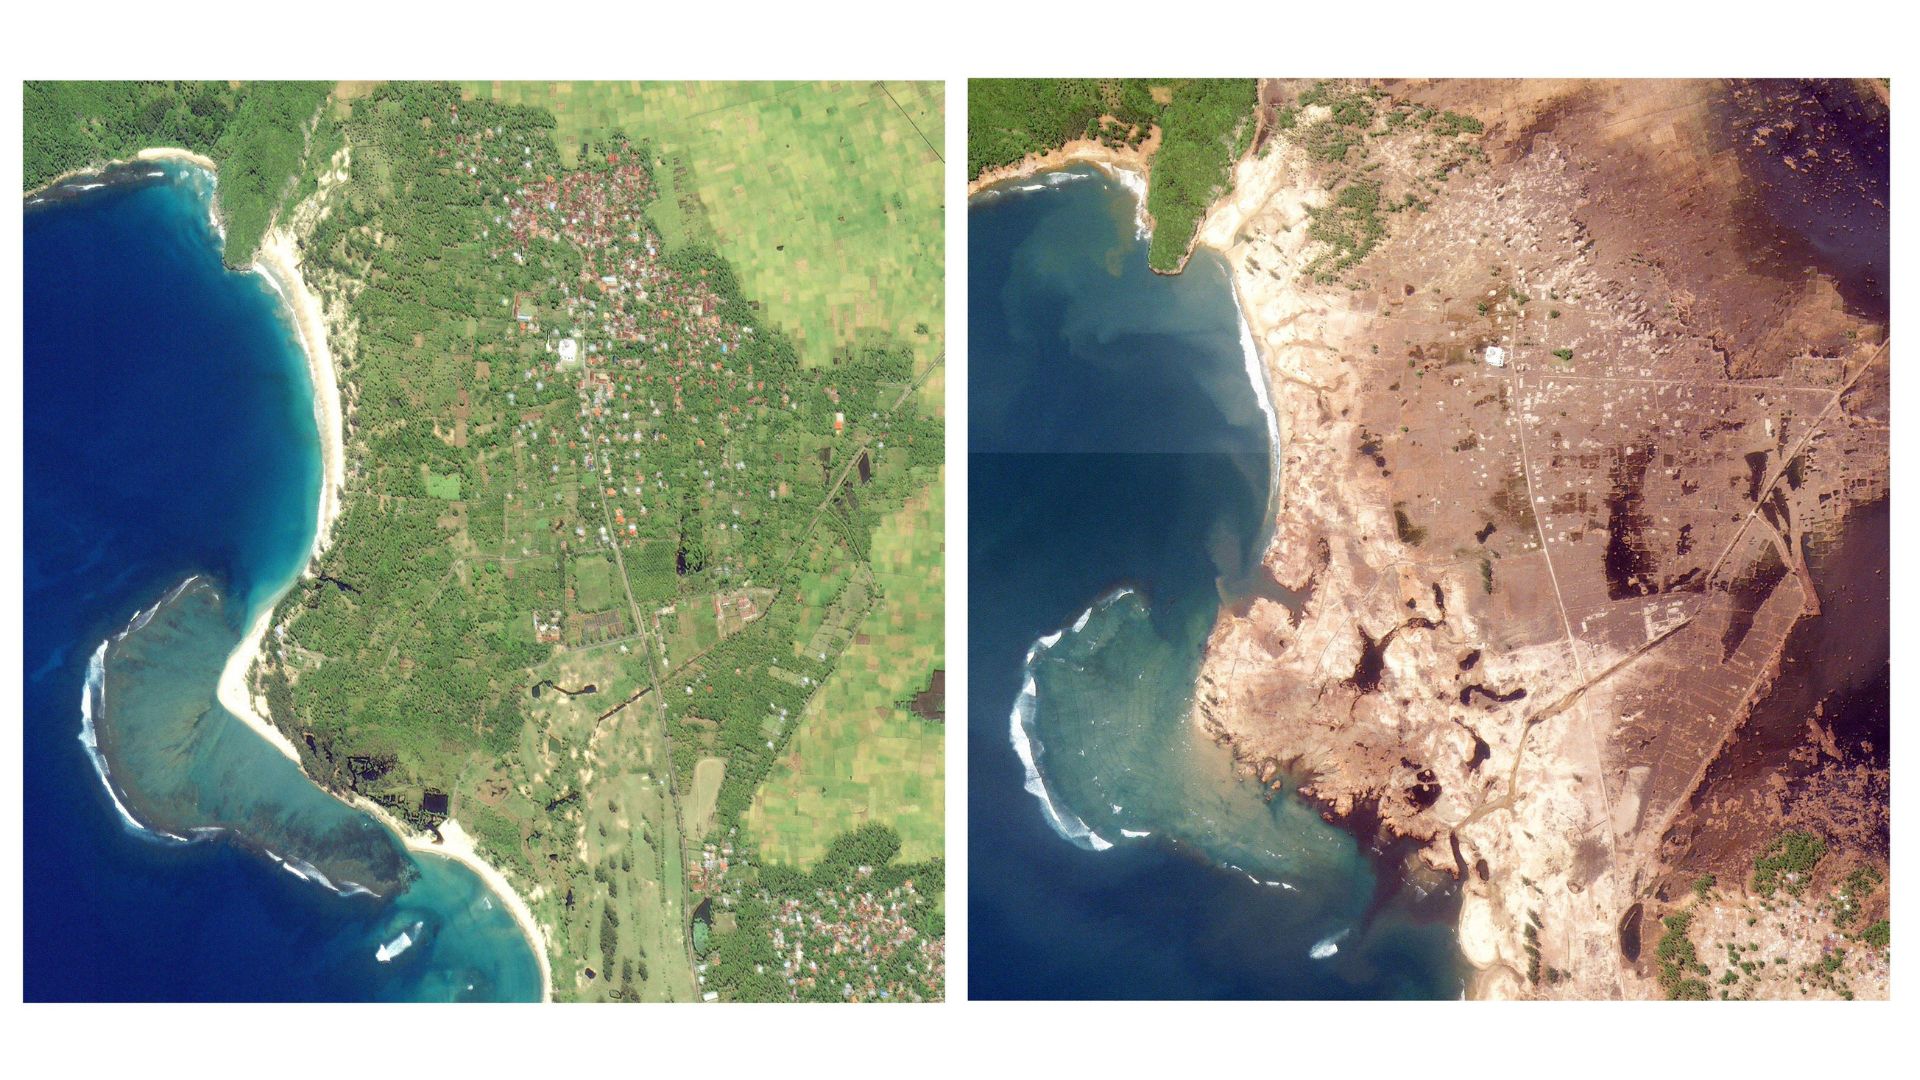 banda-aceh-tsunami-before-and-after